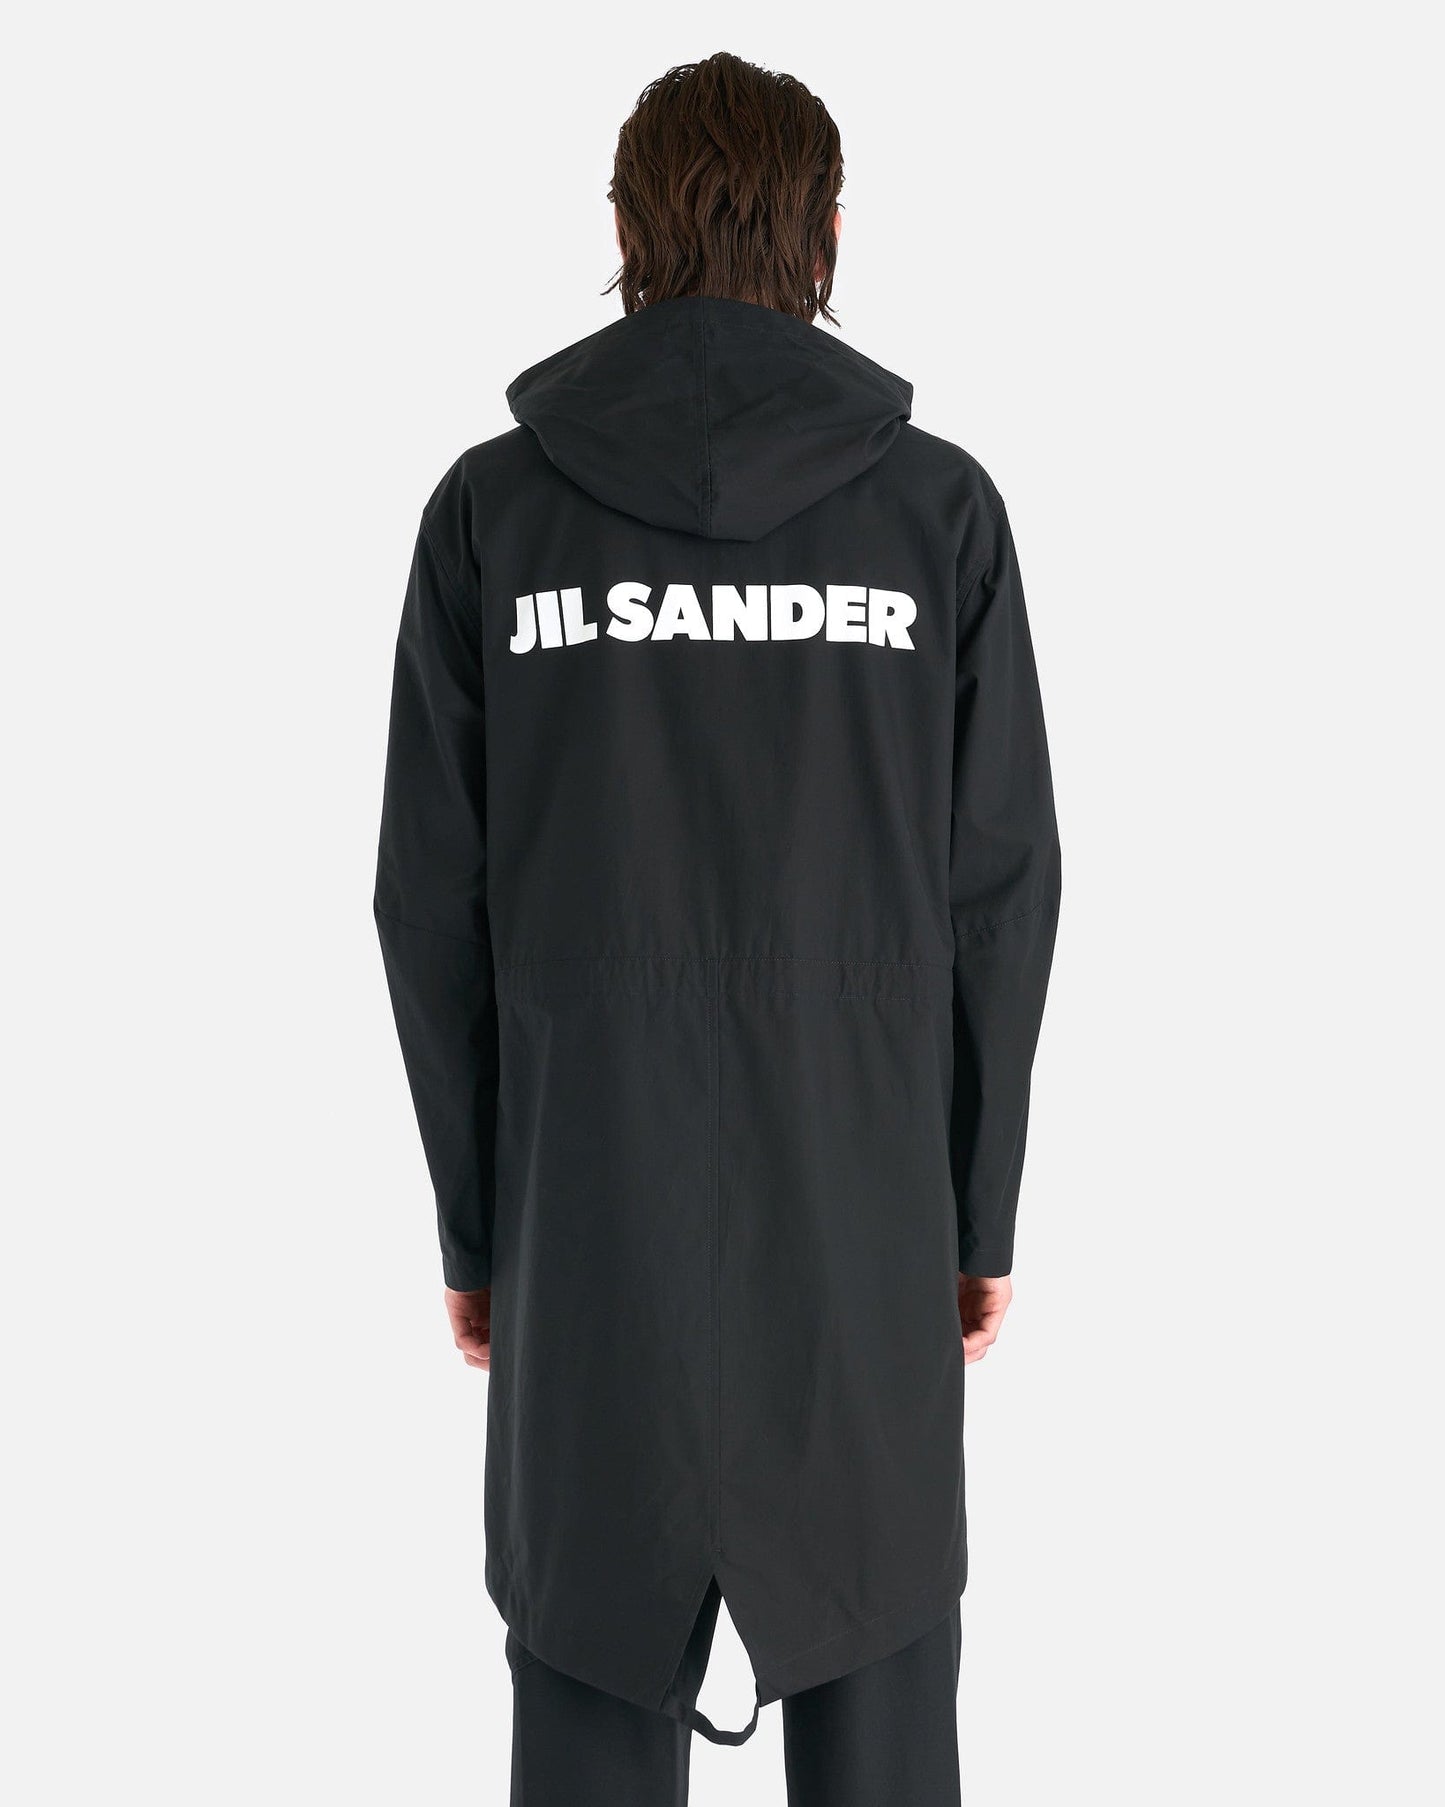 Jil Sander Men's Jackets Water Repellent Cotton Logo Parka 01 in Black